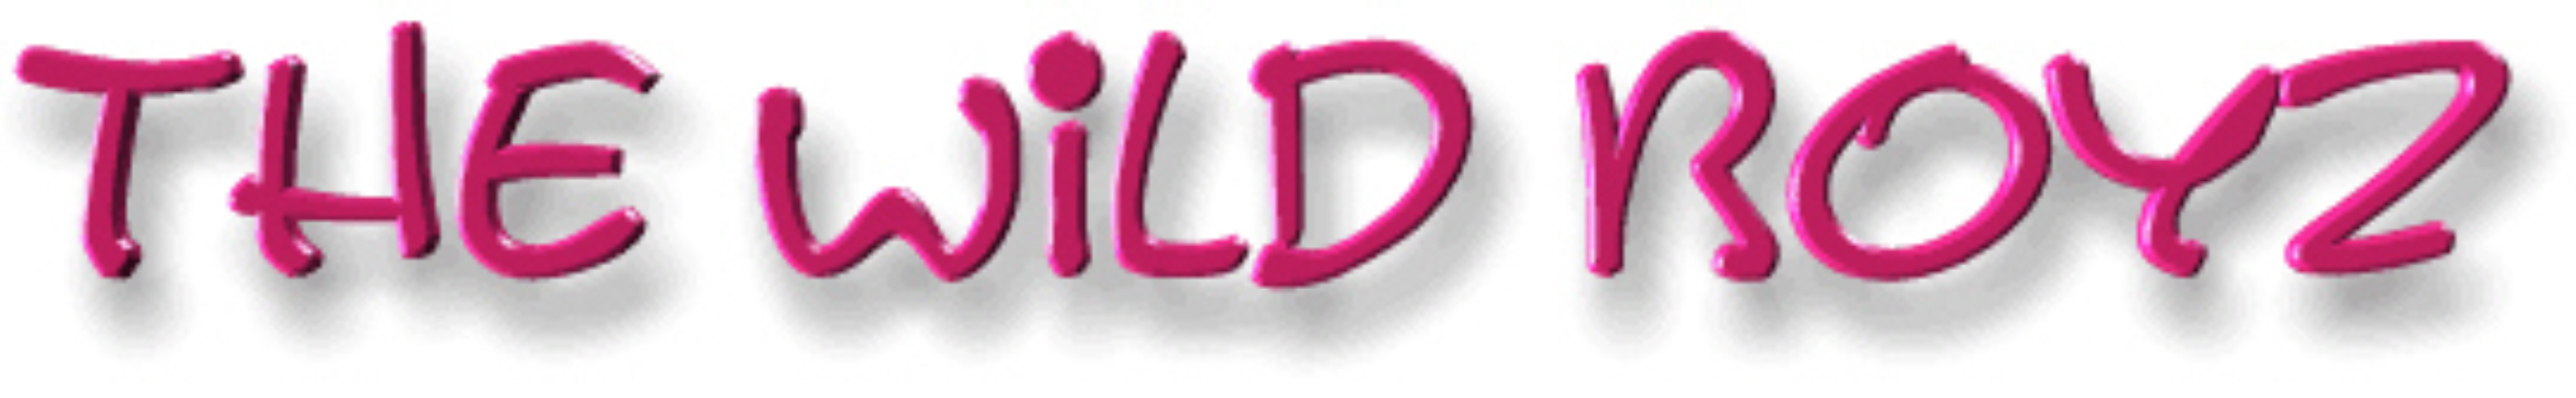 WB logo 2